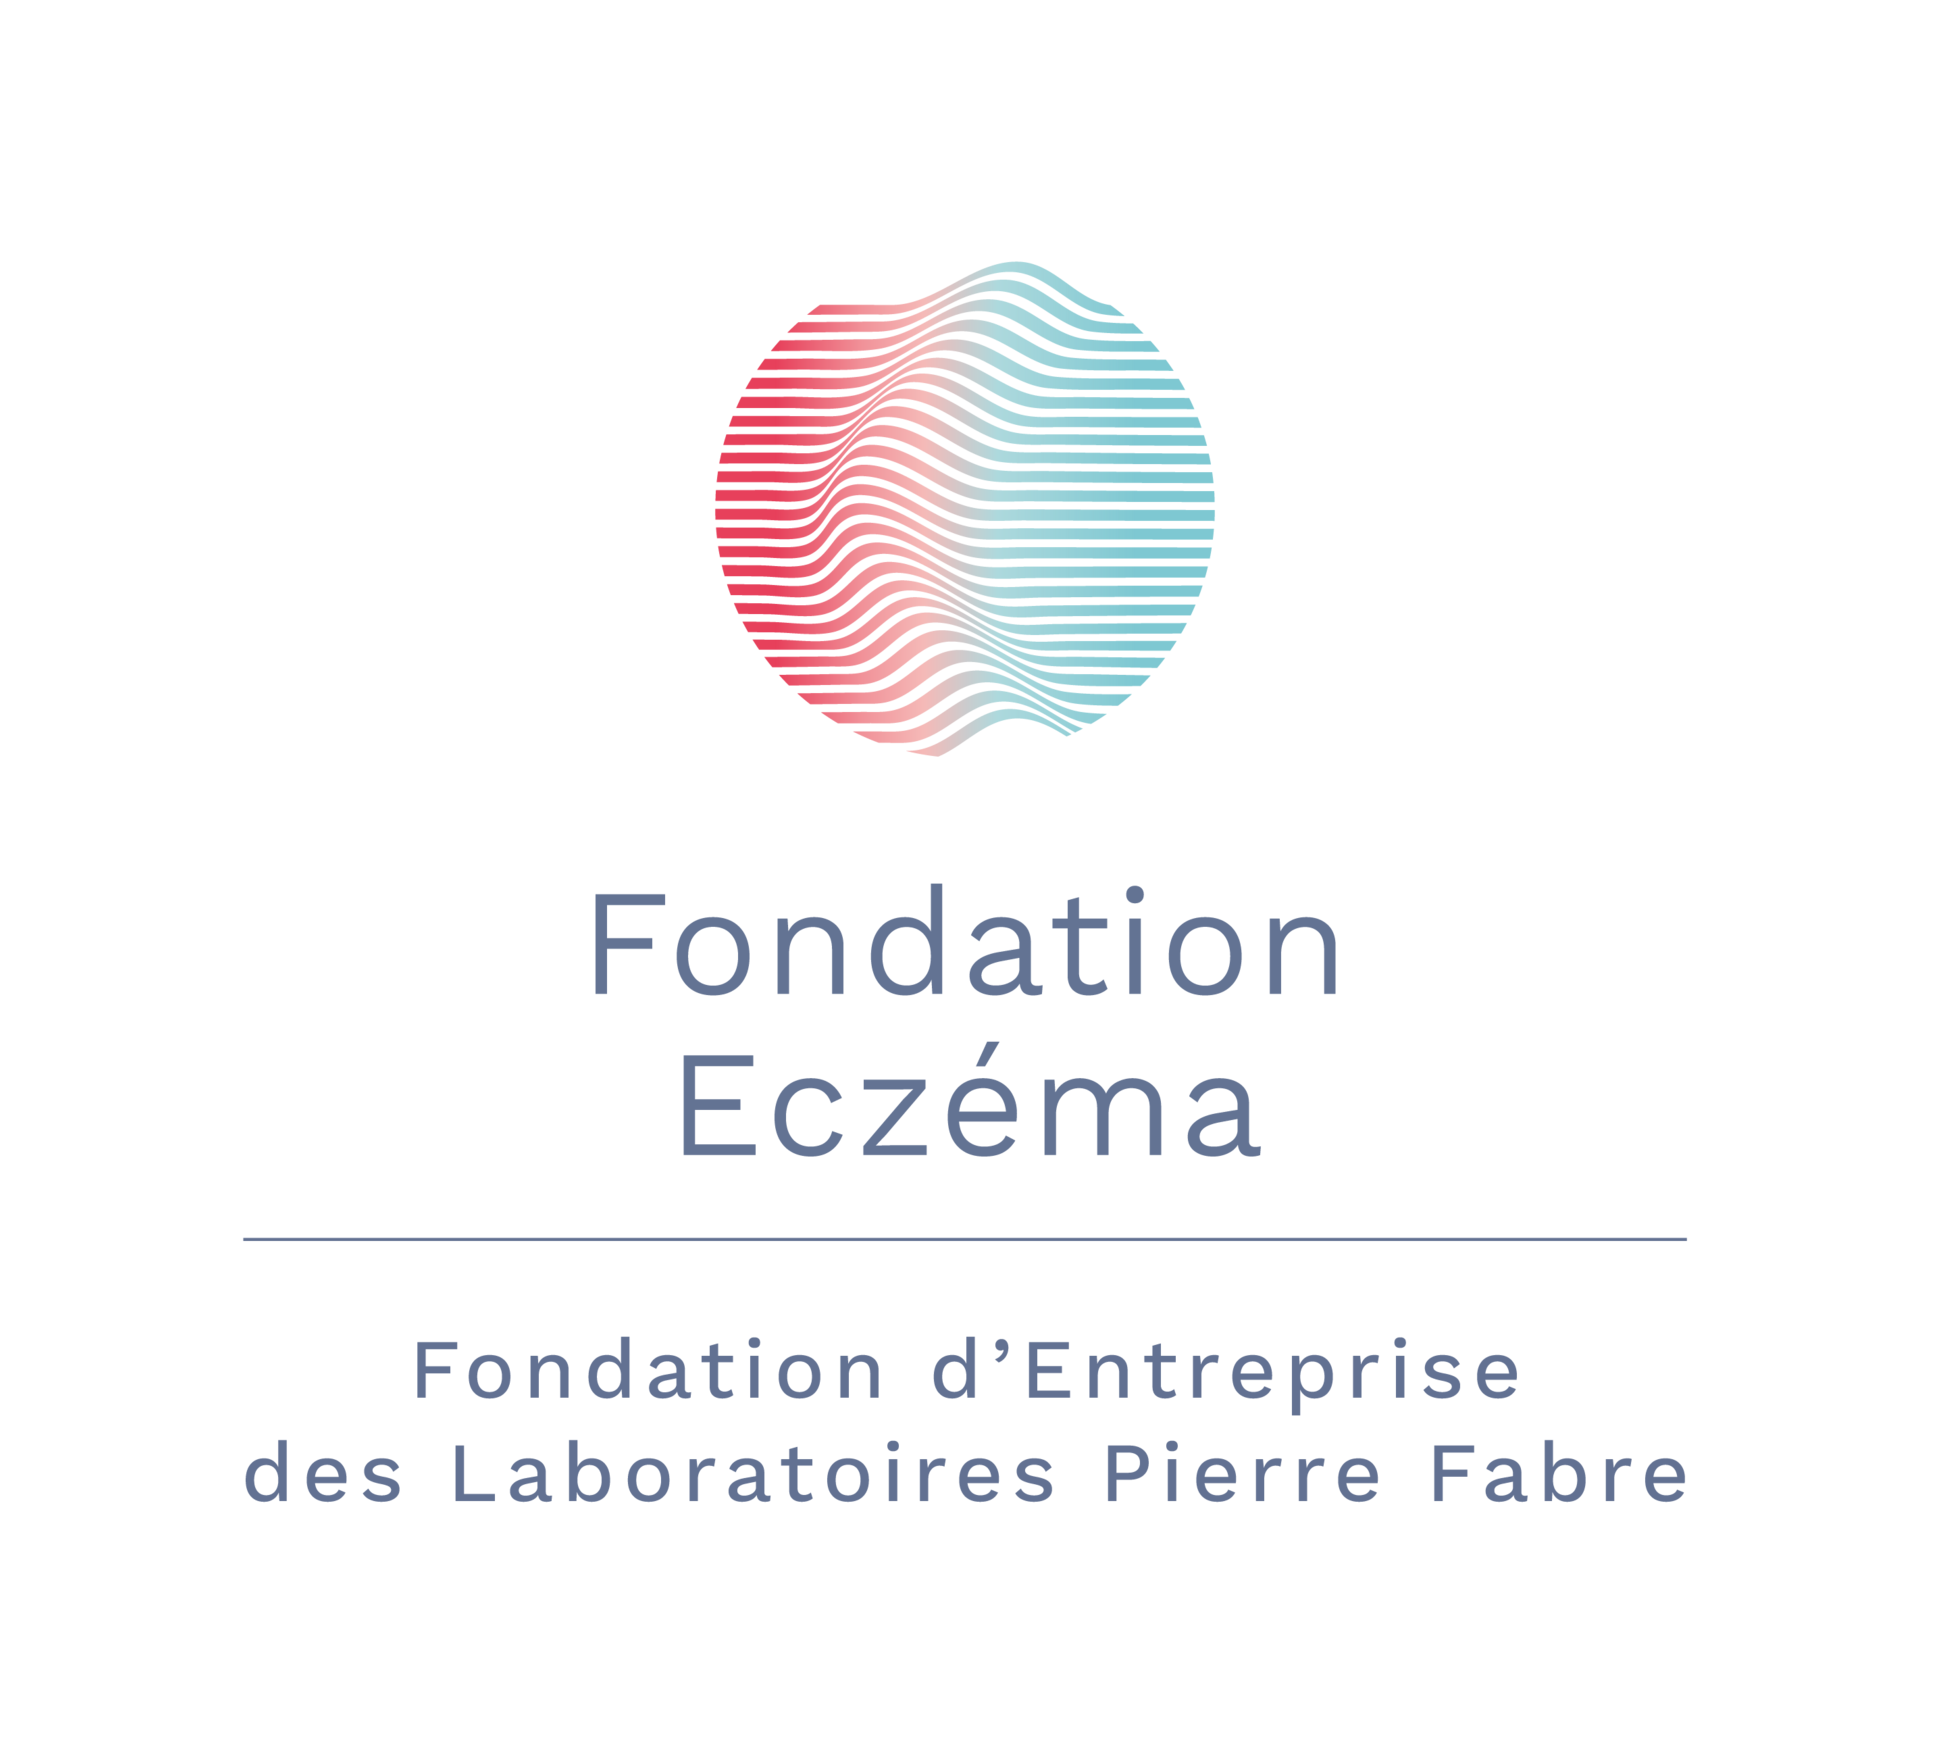 AD_LOGO_FONDATION-ECZEMA-PF_2021 577x505